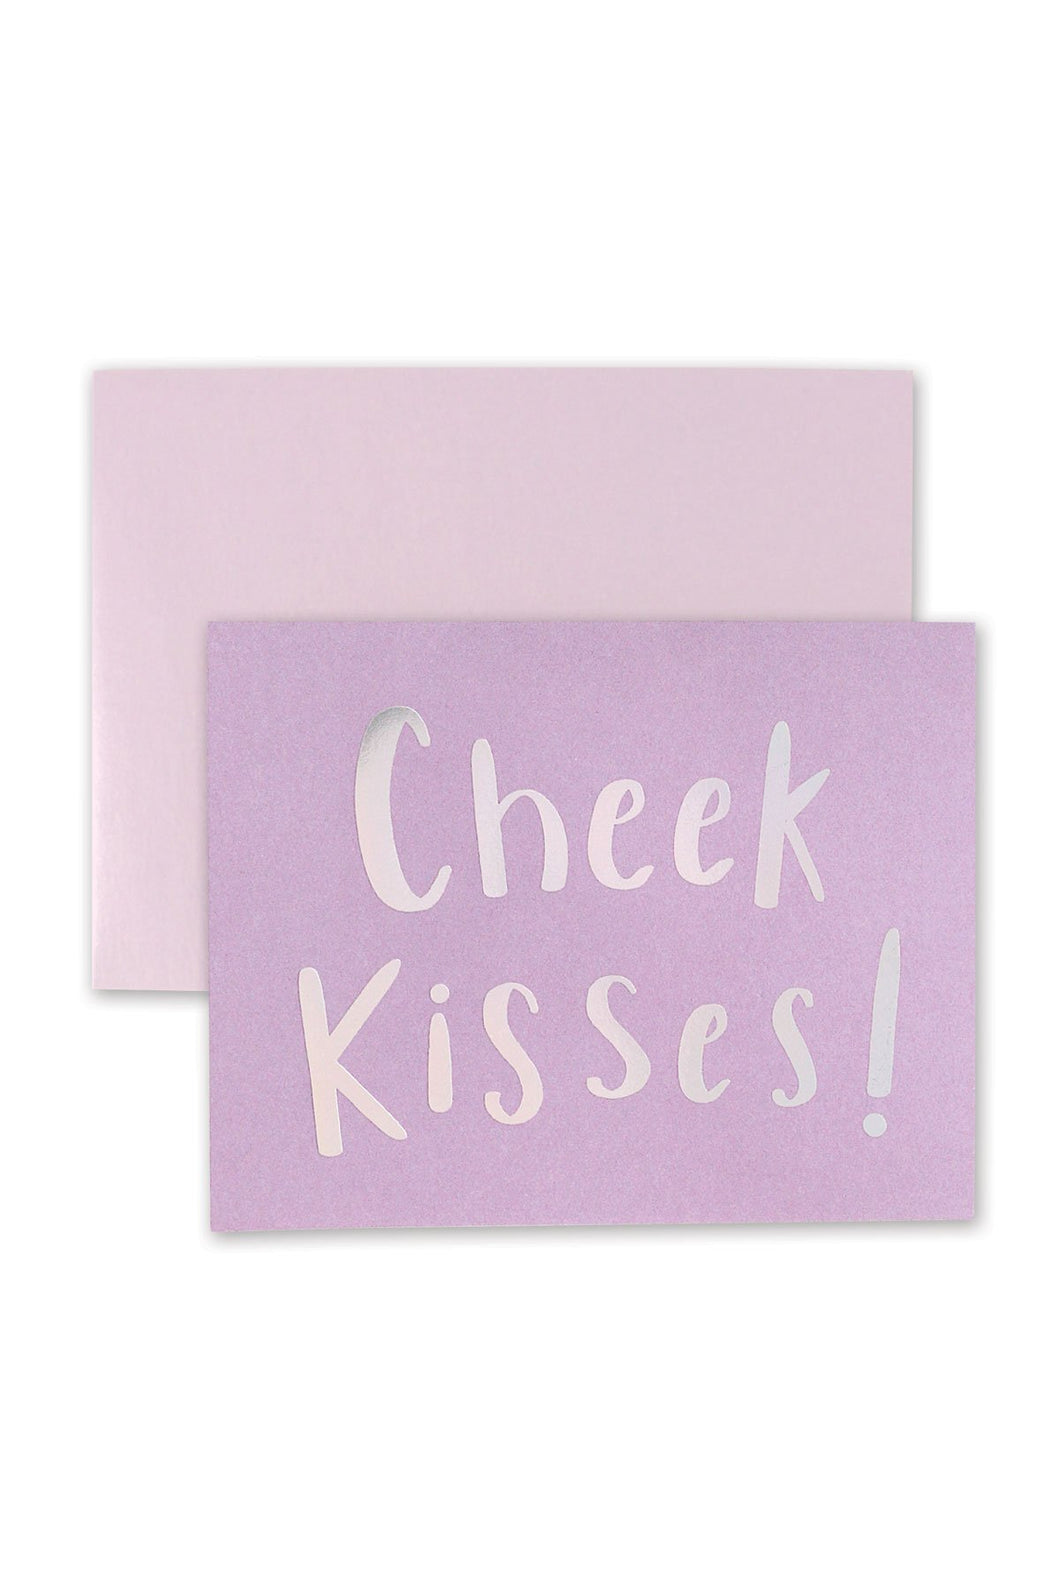 Cheek Kisses Eid Card by Hello Holy Days!